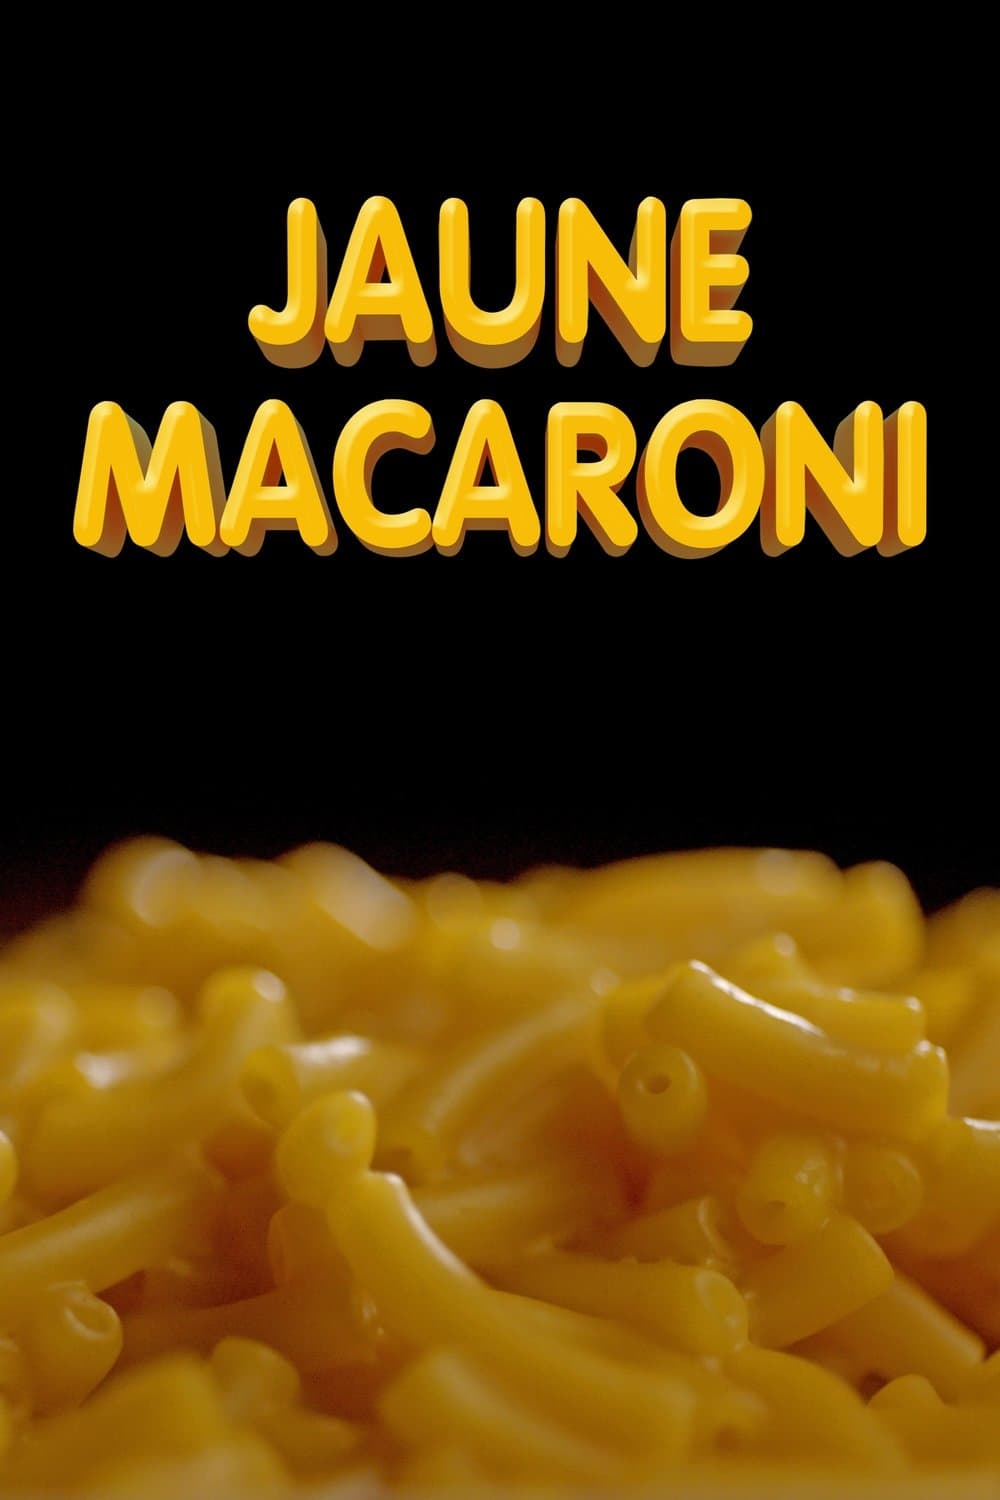 Jaune macaroni